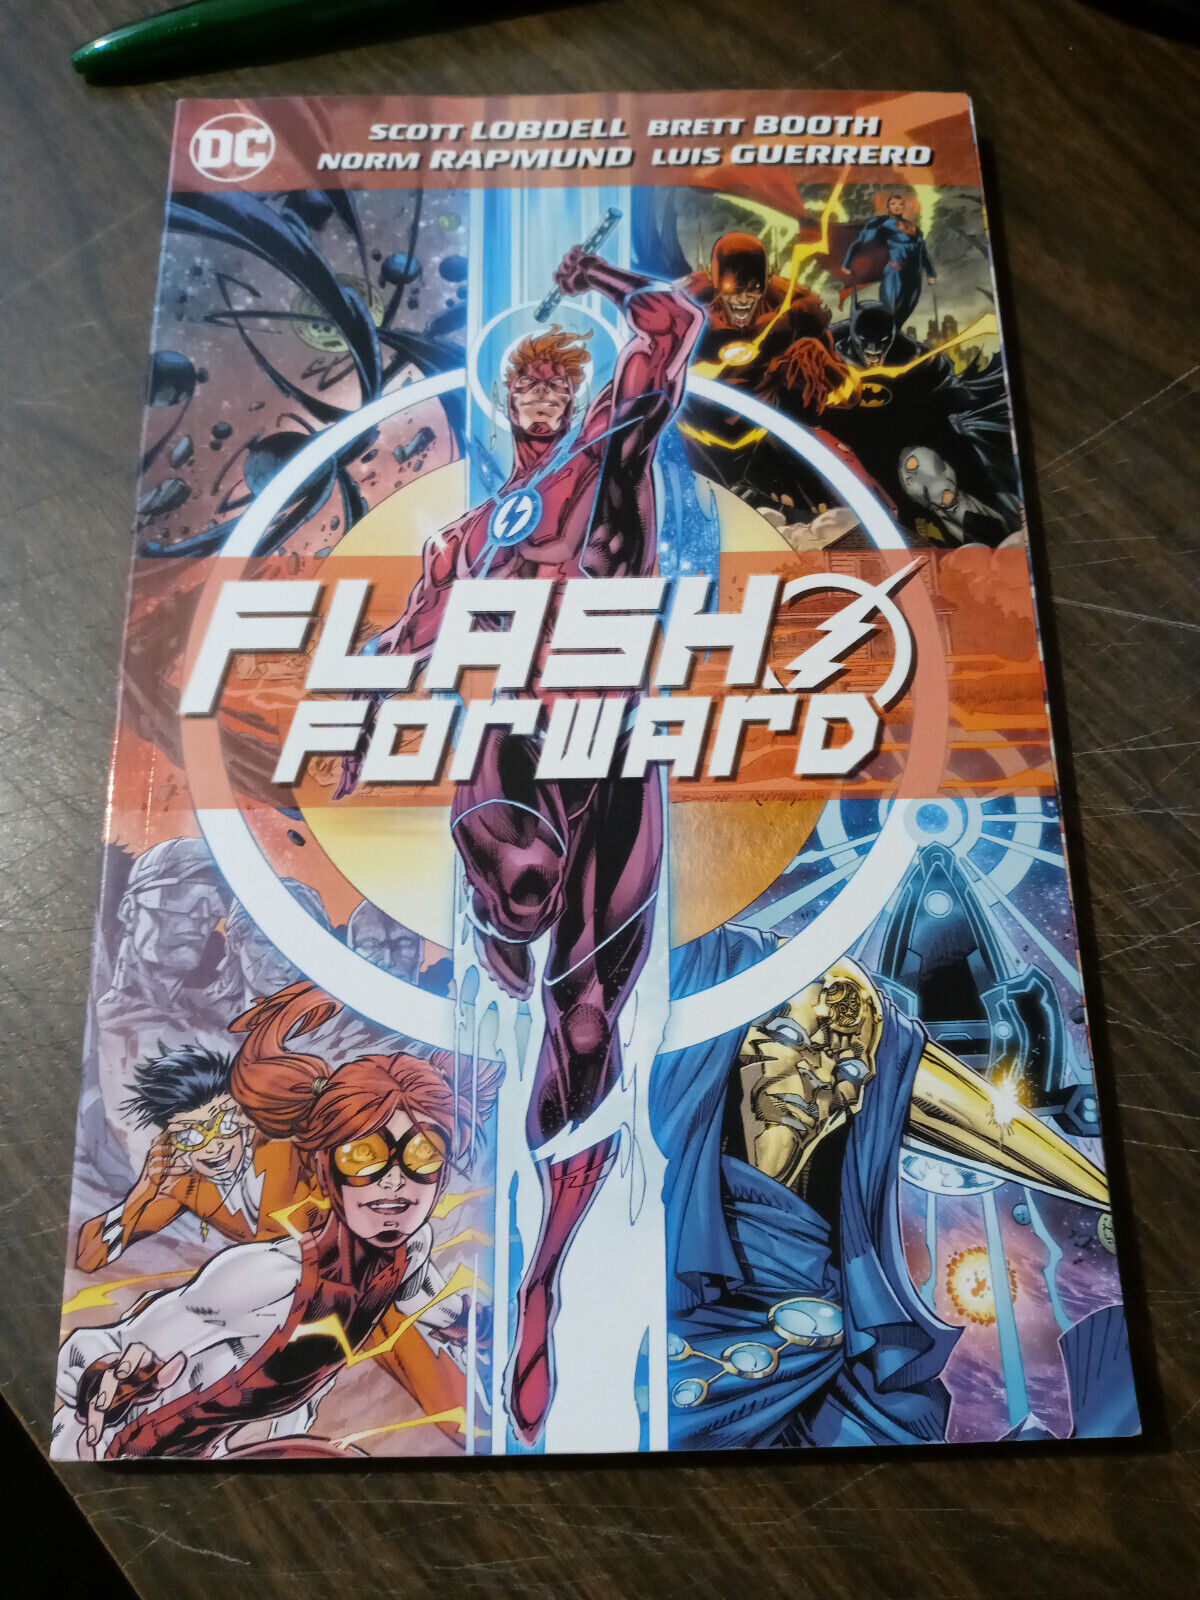 DC Comics The Flash - Flash Forward by Scott Lobdell (Trade Paperback, 2020)